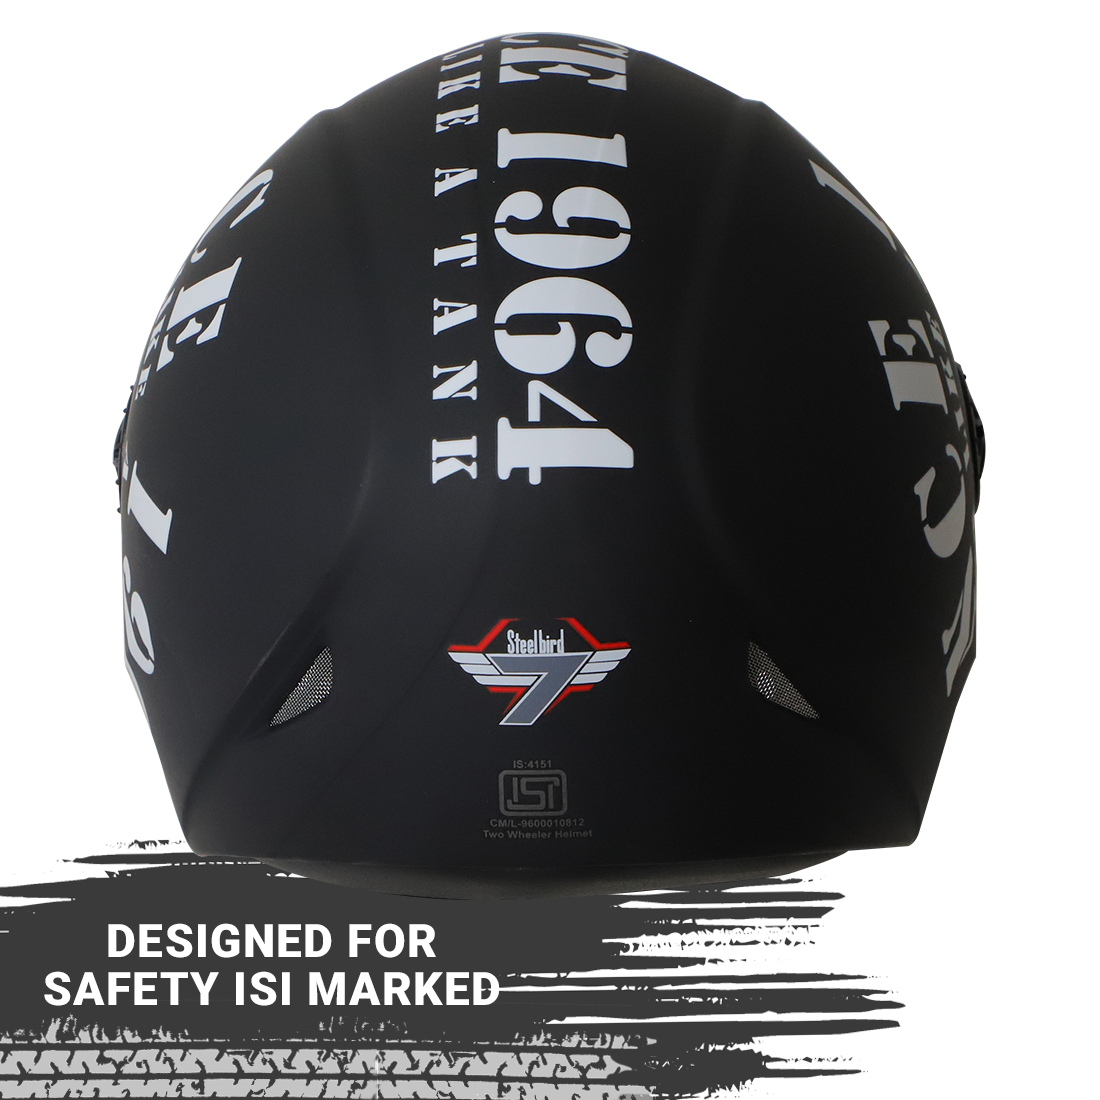 Steelbird SB-50 Adonis Tank Full Face Graphic Helmet Motorbike Helmet (Matt Black White With Clear Visor)